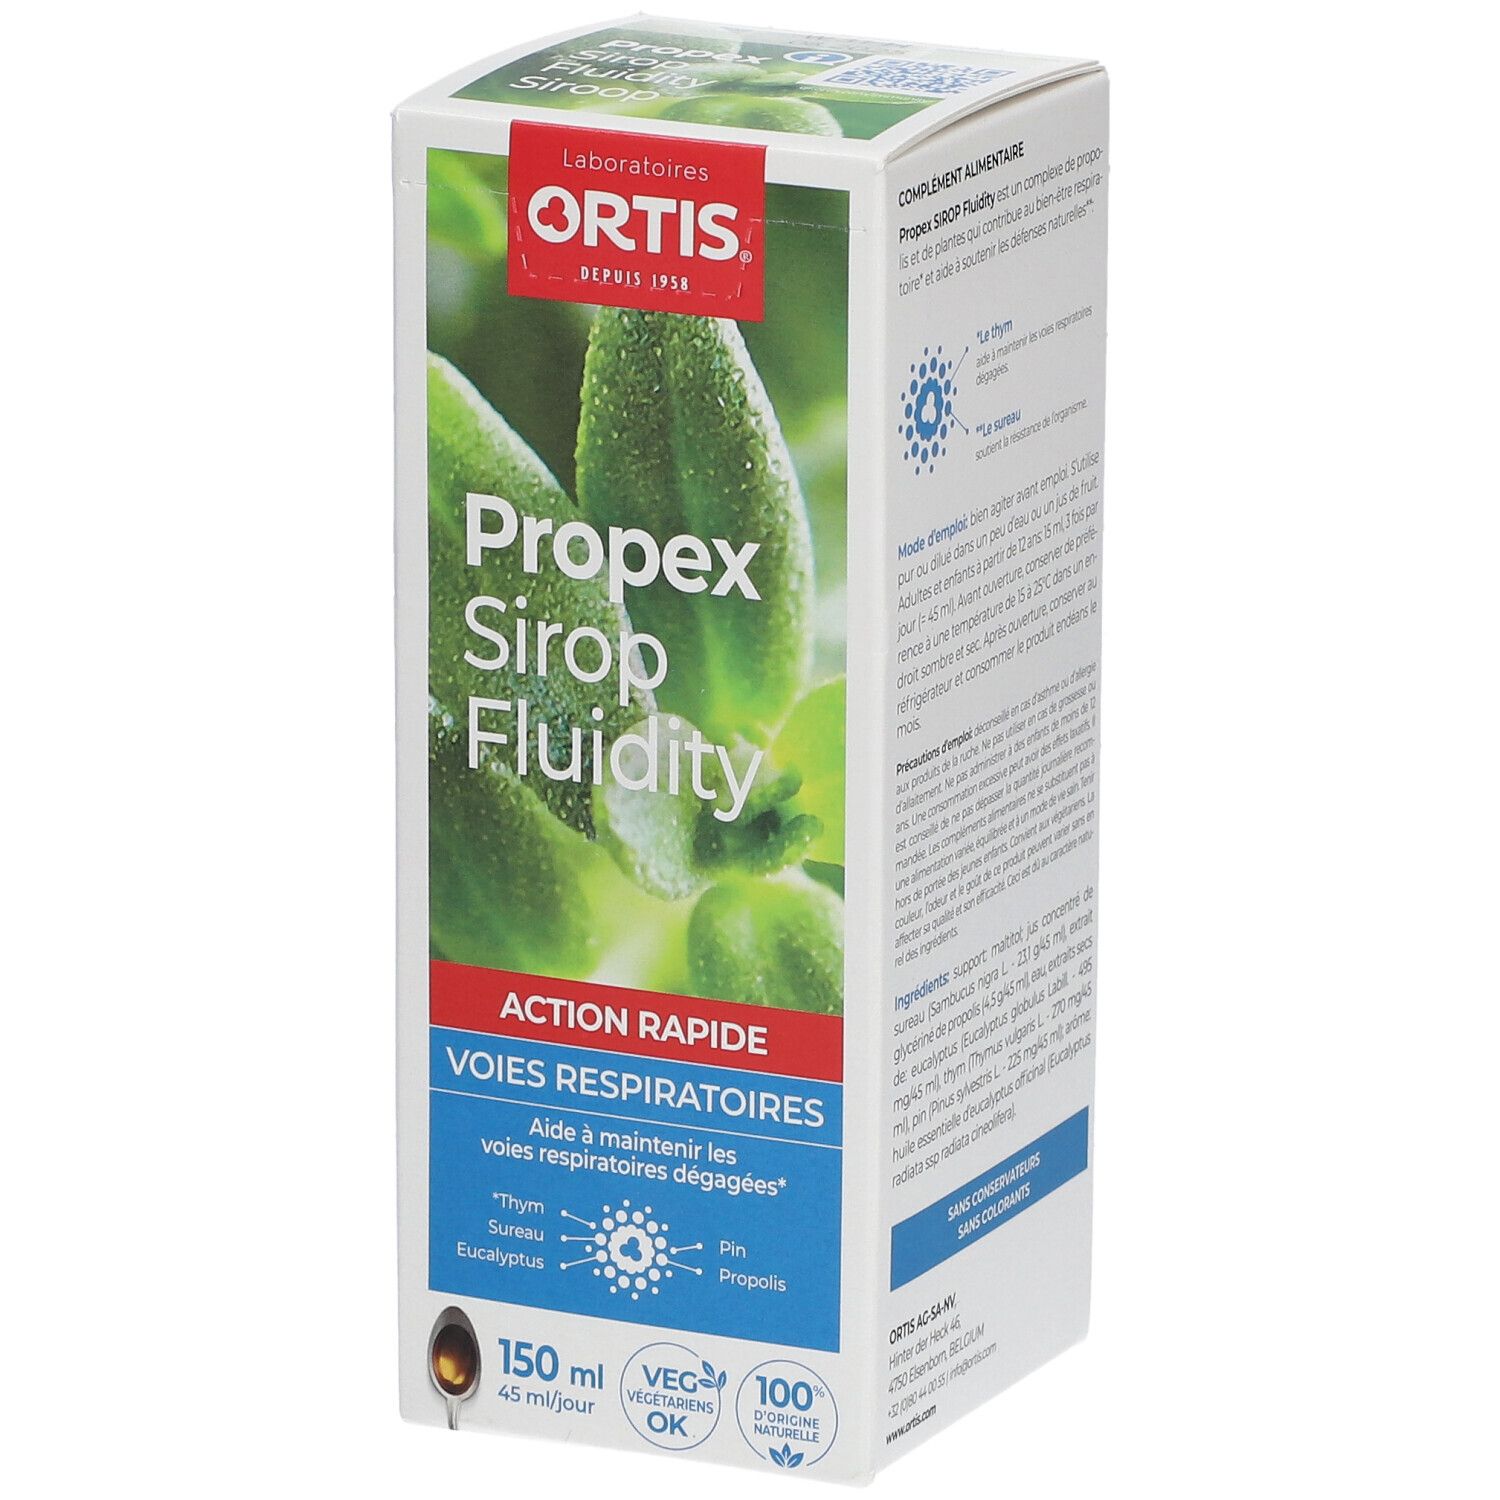 Ortis® Propex Sirop fluidity